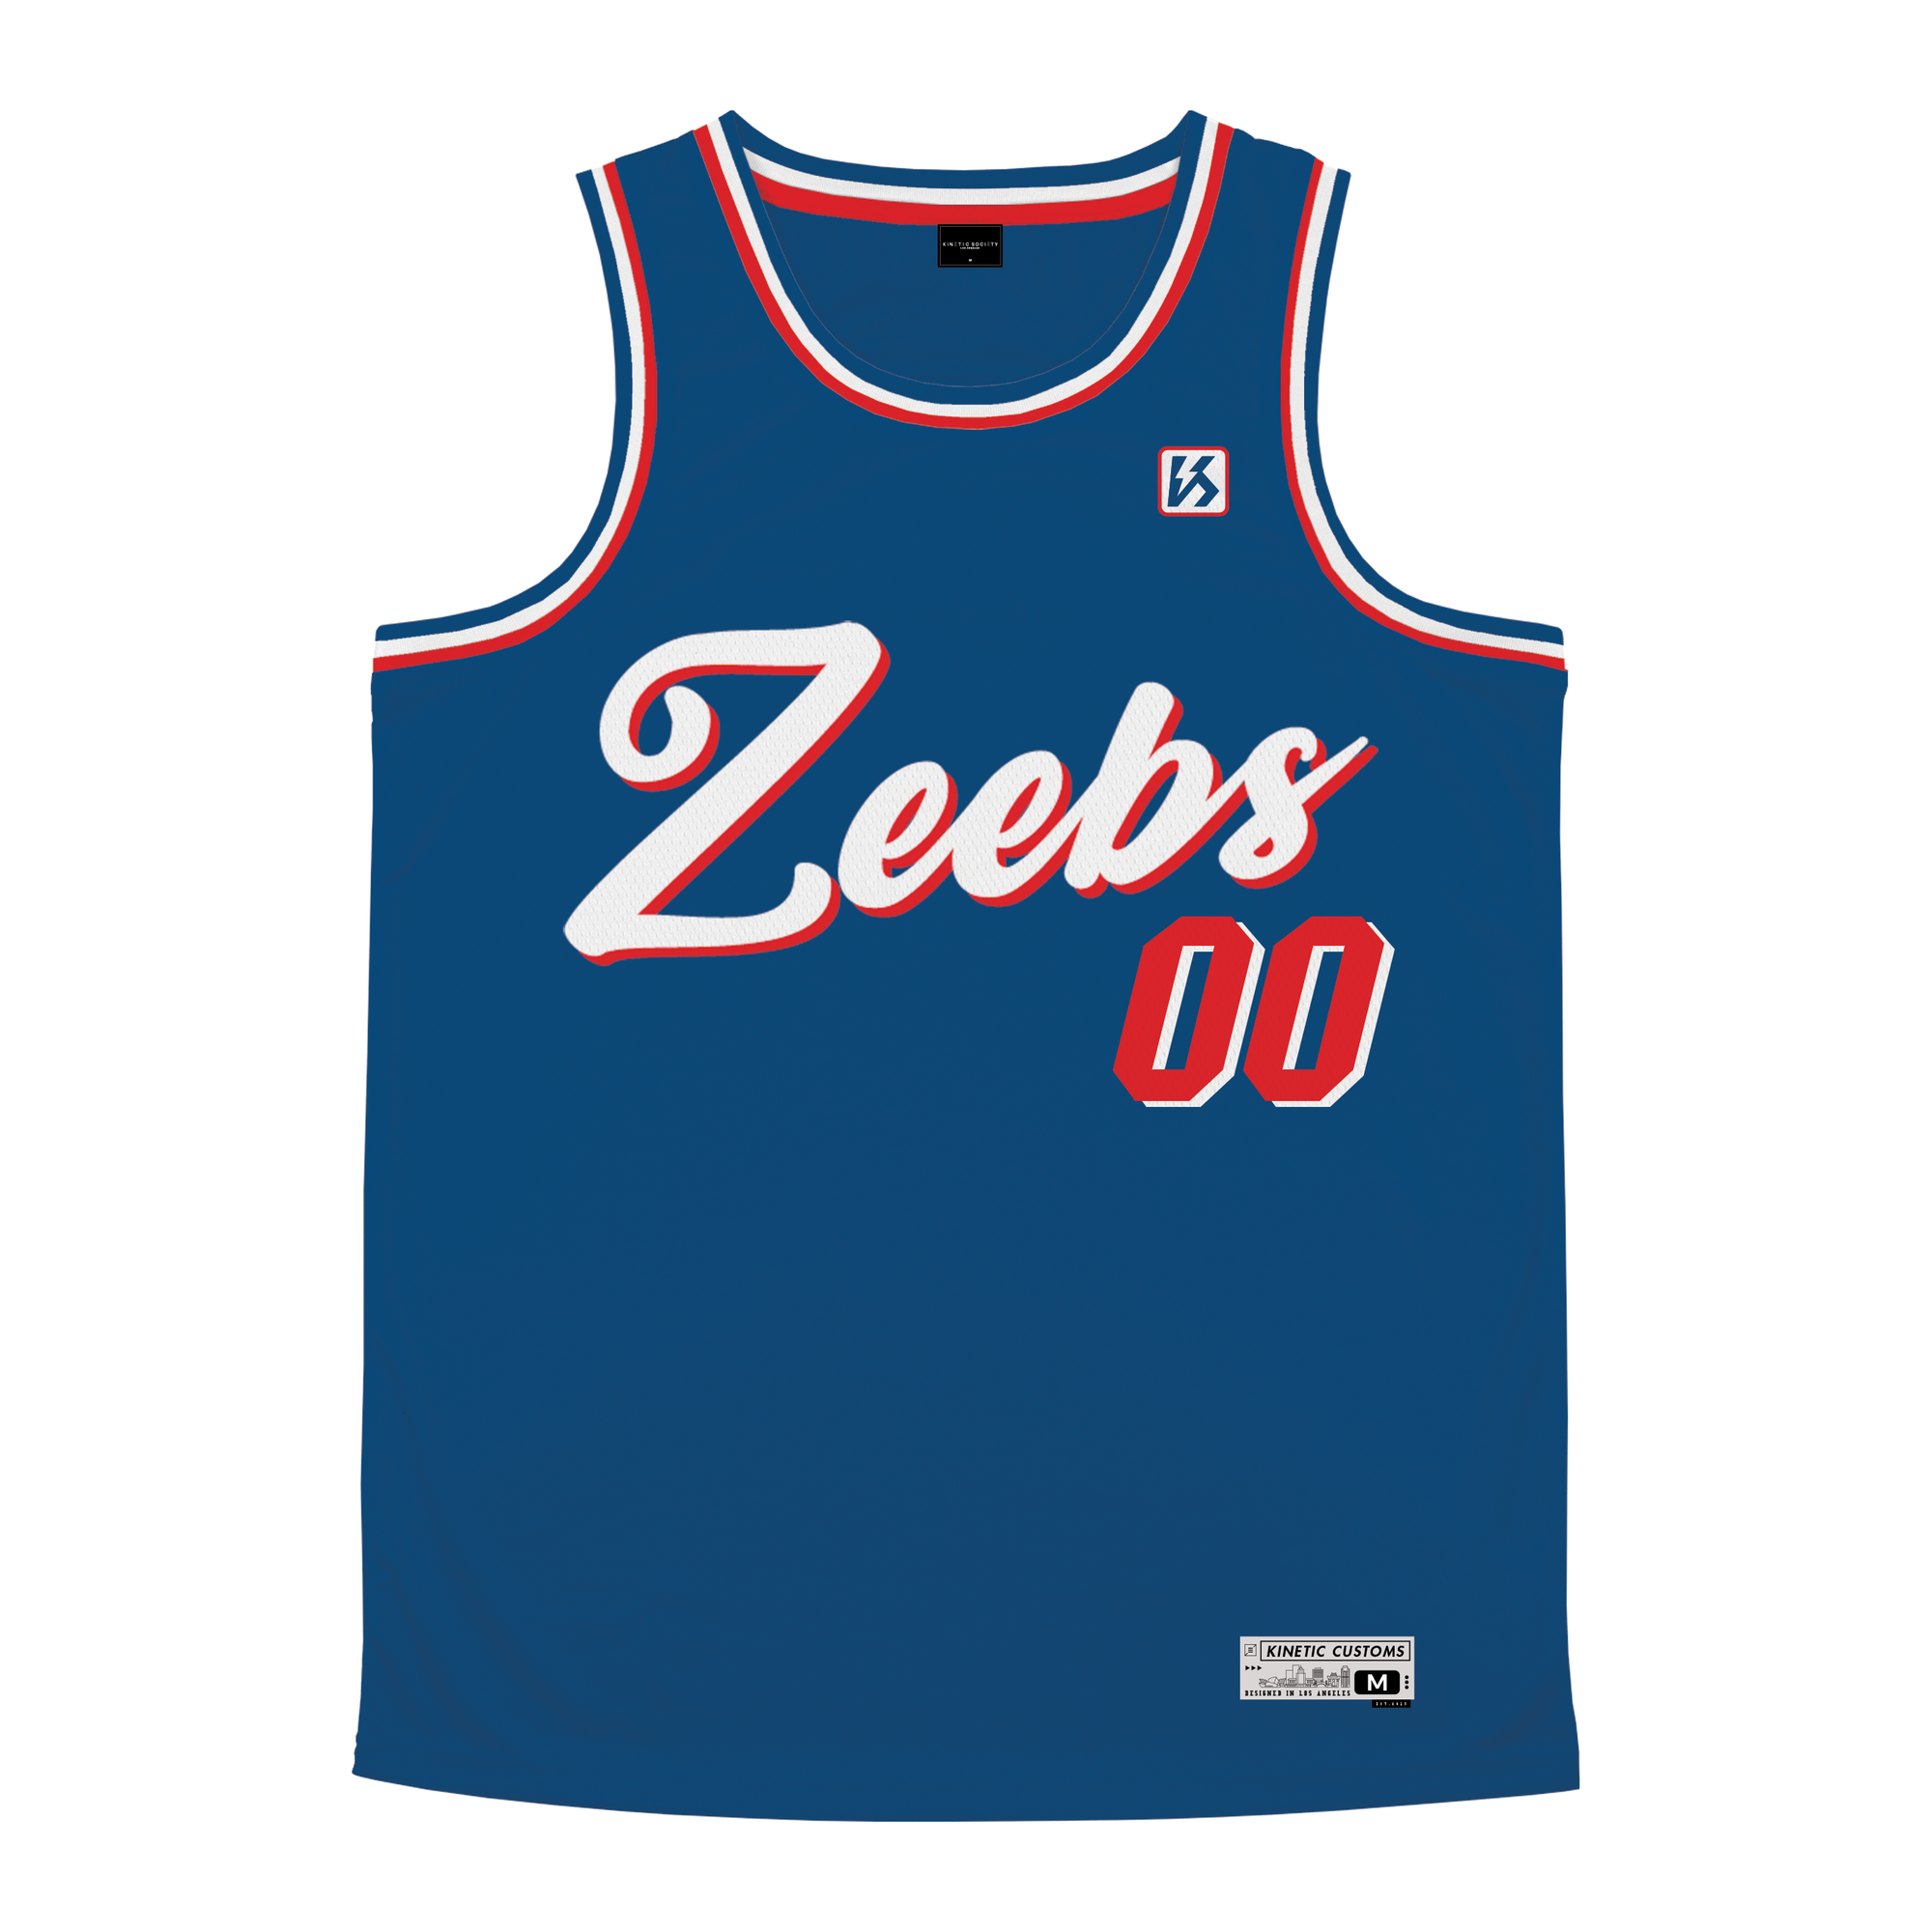 Zeta Beta Tau - The Dream Basketball Jersey